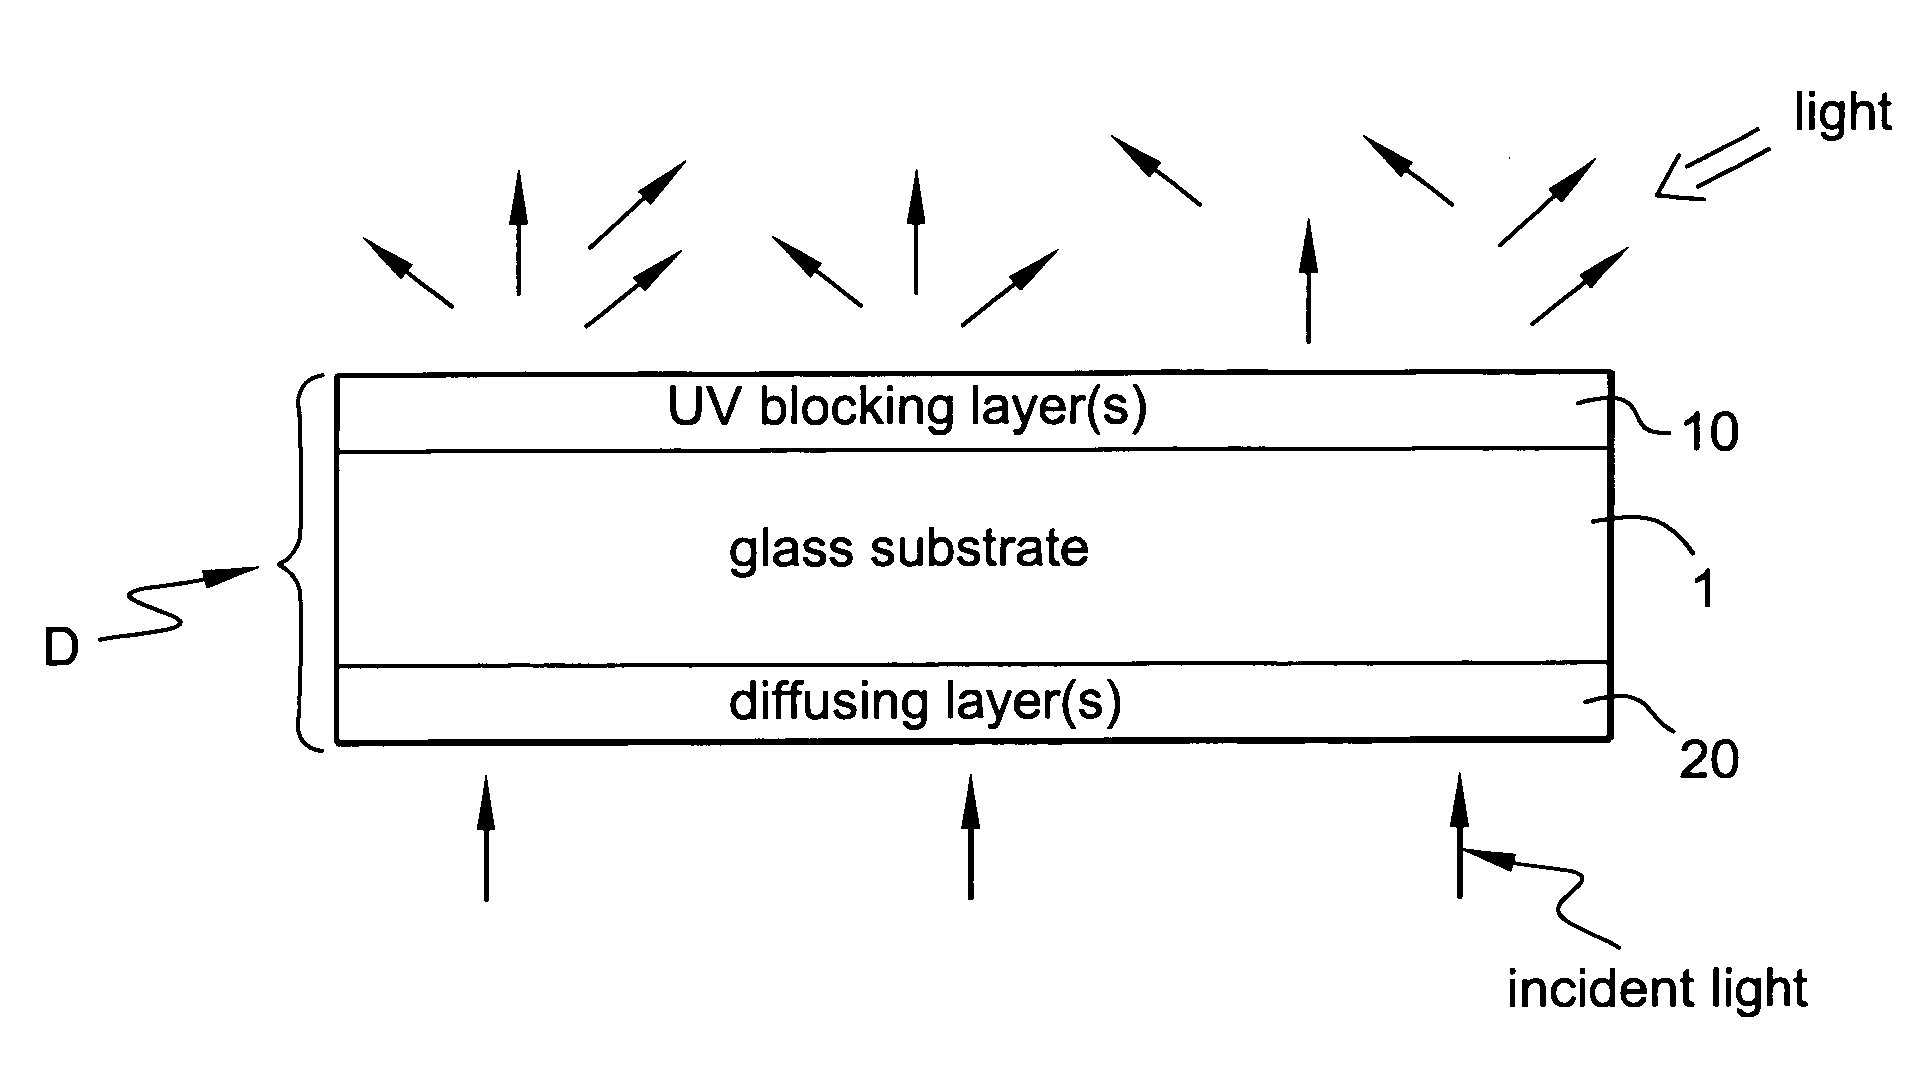 Optical diffuser with UV blocking coating using inorganic materials for blocking UV